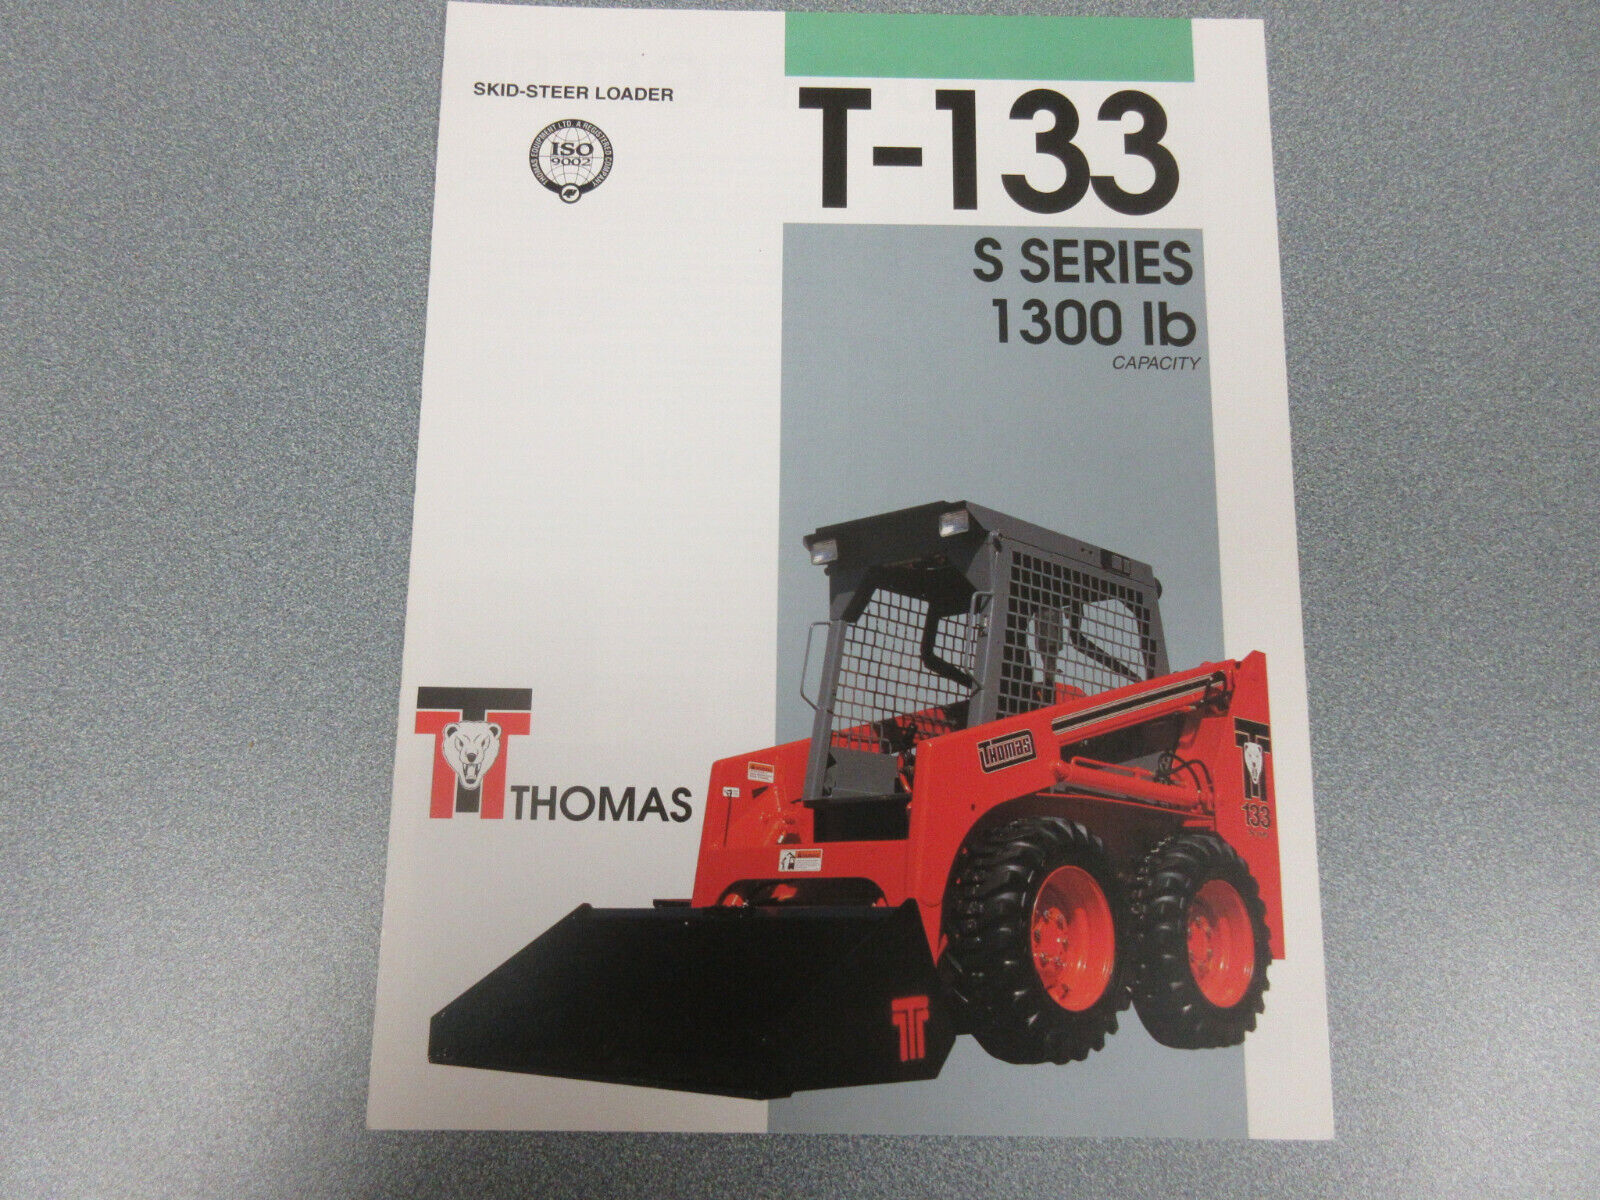 Thomas T-133 Skid Steer Loader Brochure 4 pages